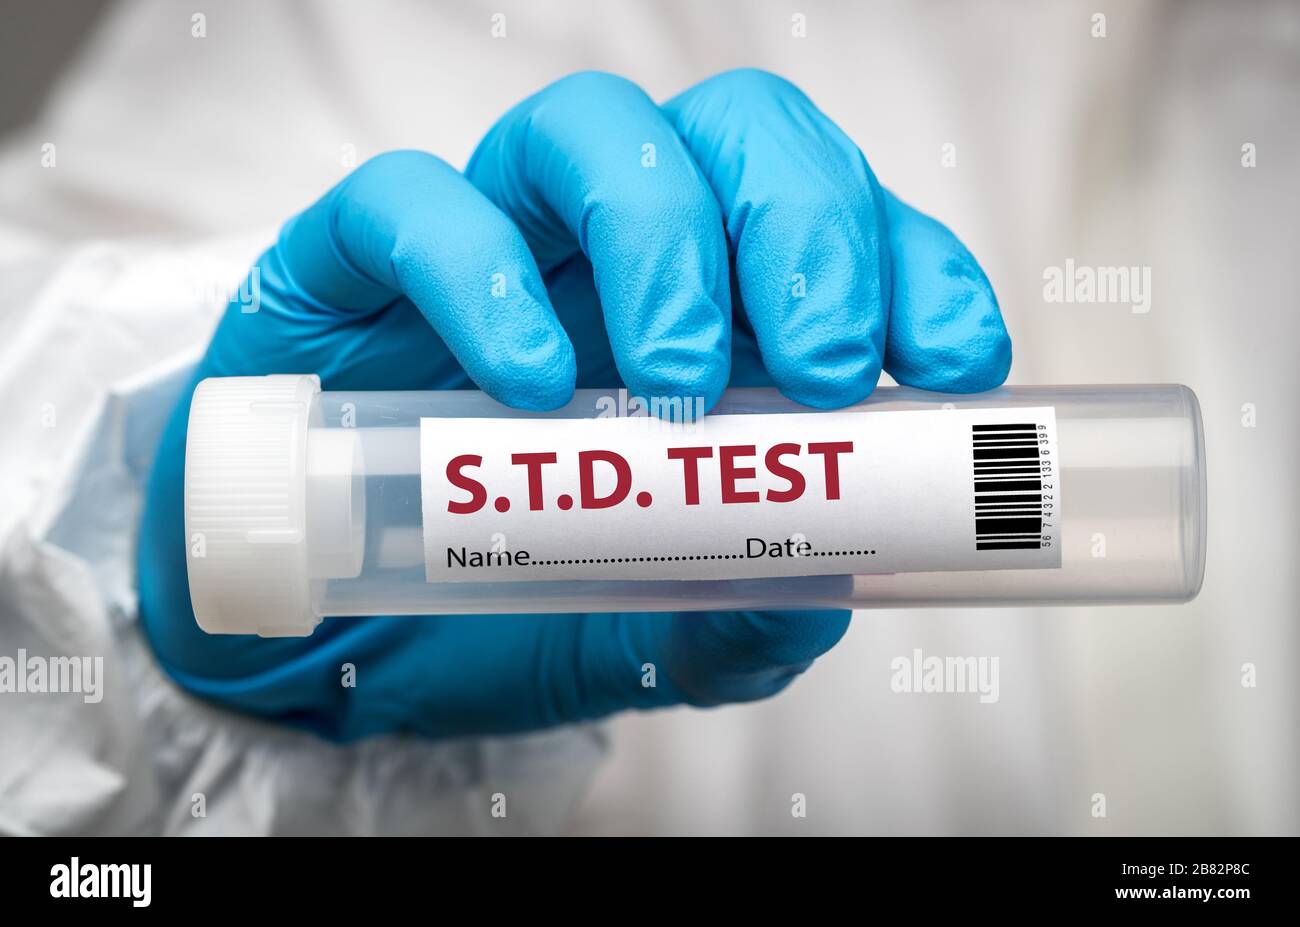 STD swab test Stock Photo